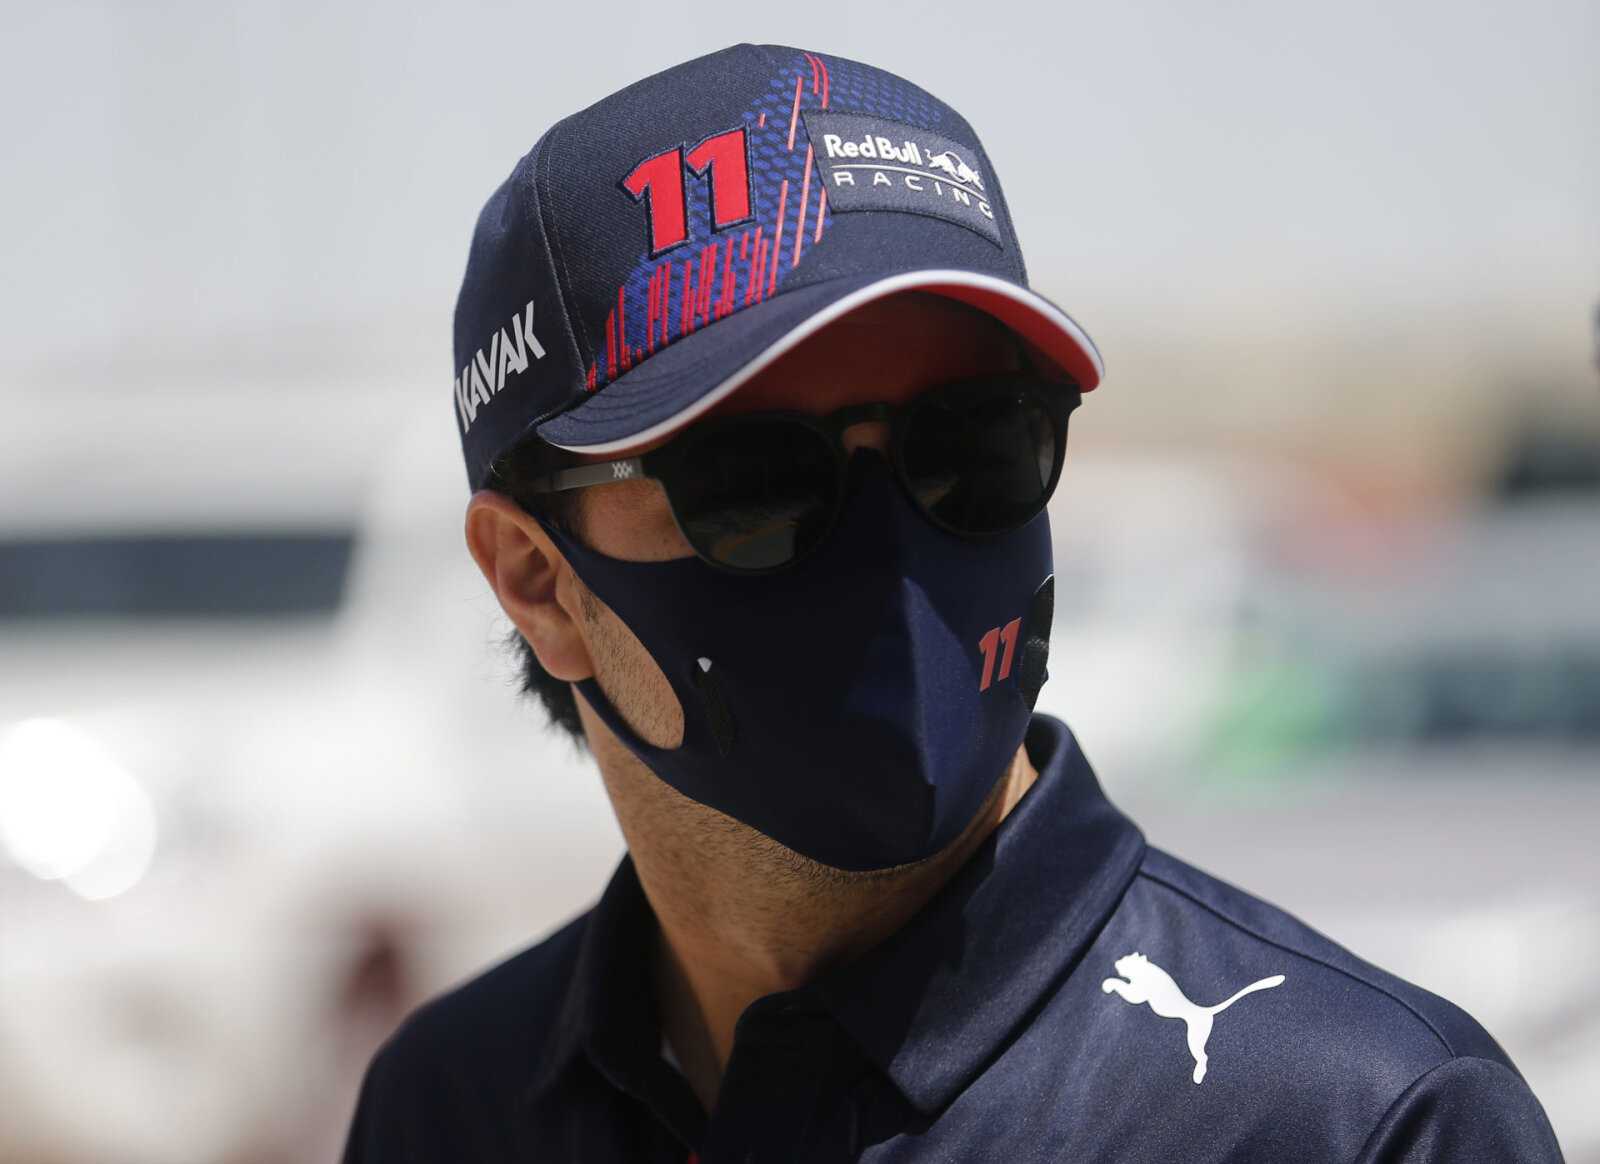 Pilote Red Bull F1 Sergio Perez dans le paddock du GP de Bahreïn